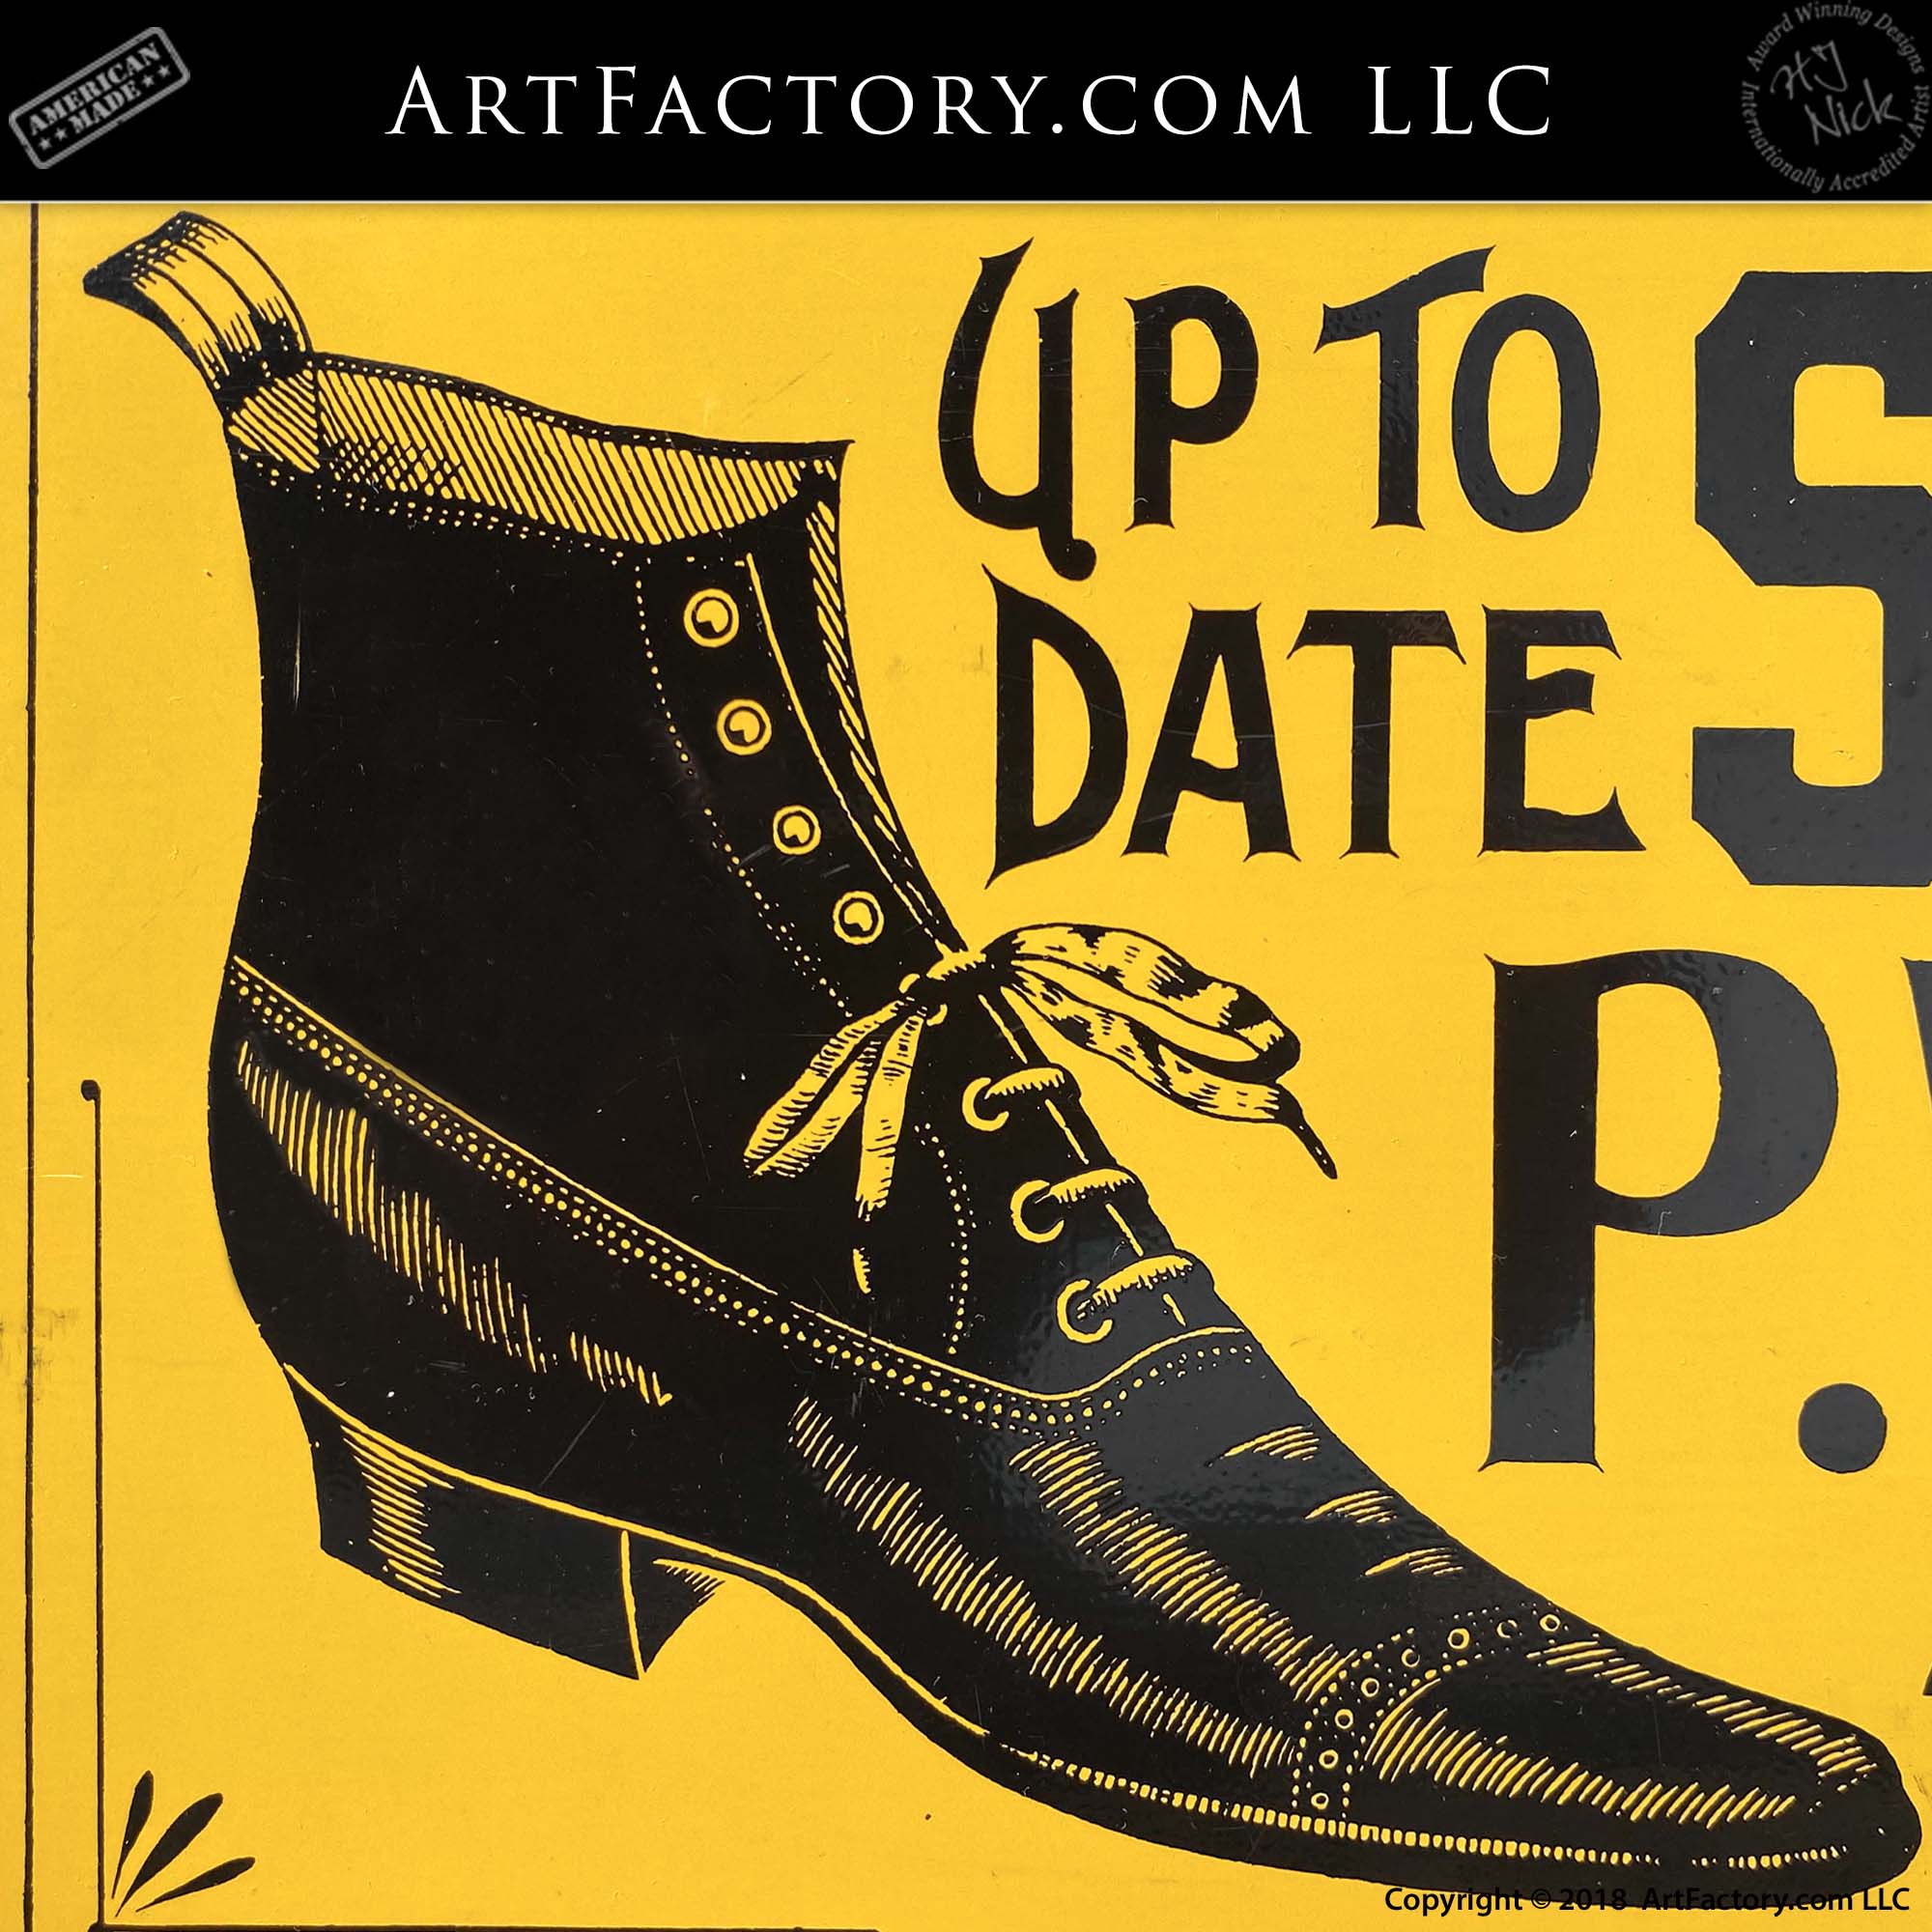 Vintage P.W.Byer Shoes Dansville NY Tin Litho Sign